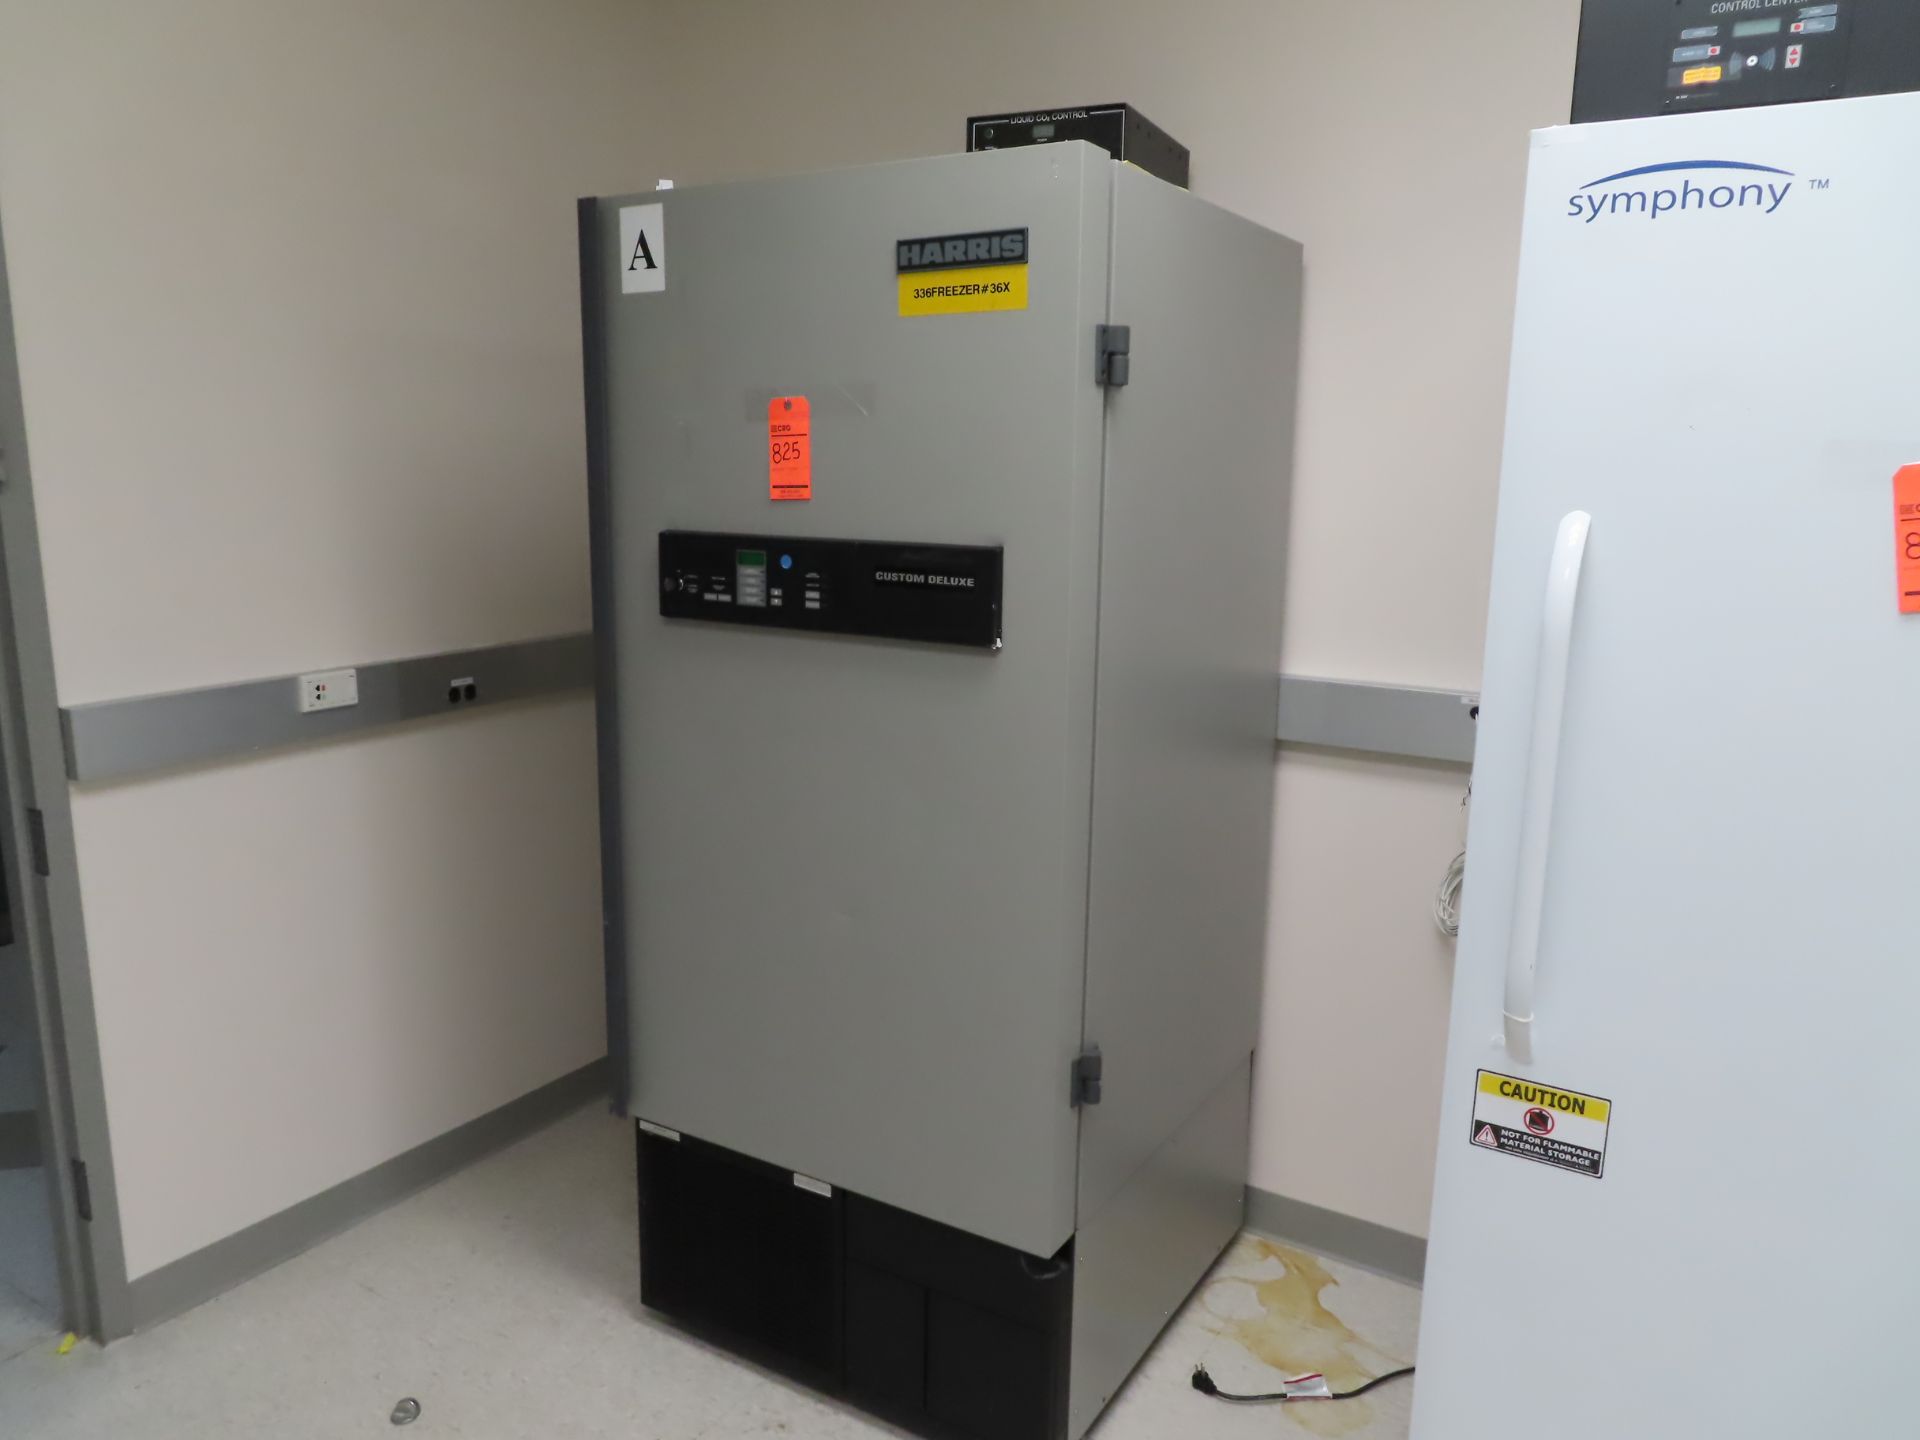 Revco DLT-17V-85D30 Biomedical freezer, s/n X19J-459124-XJ, located B wing, 3rd floor, room 360A